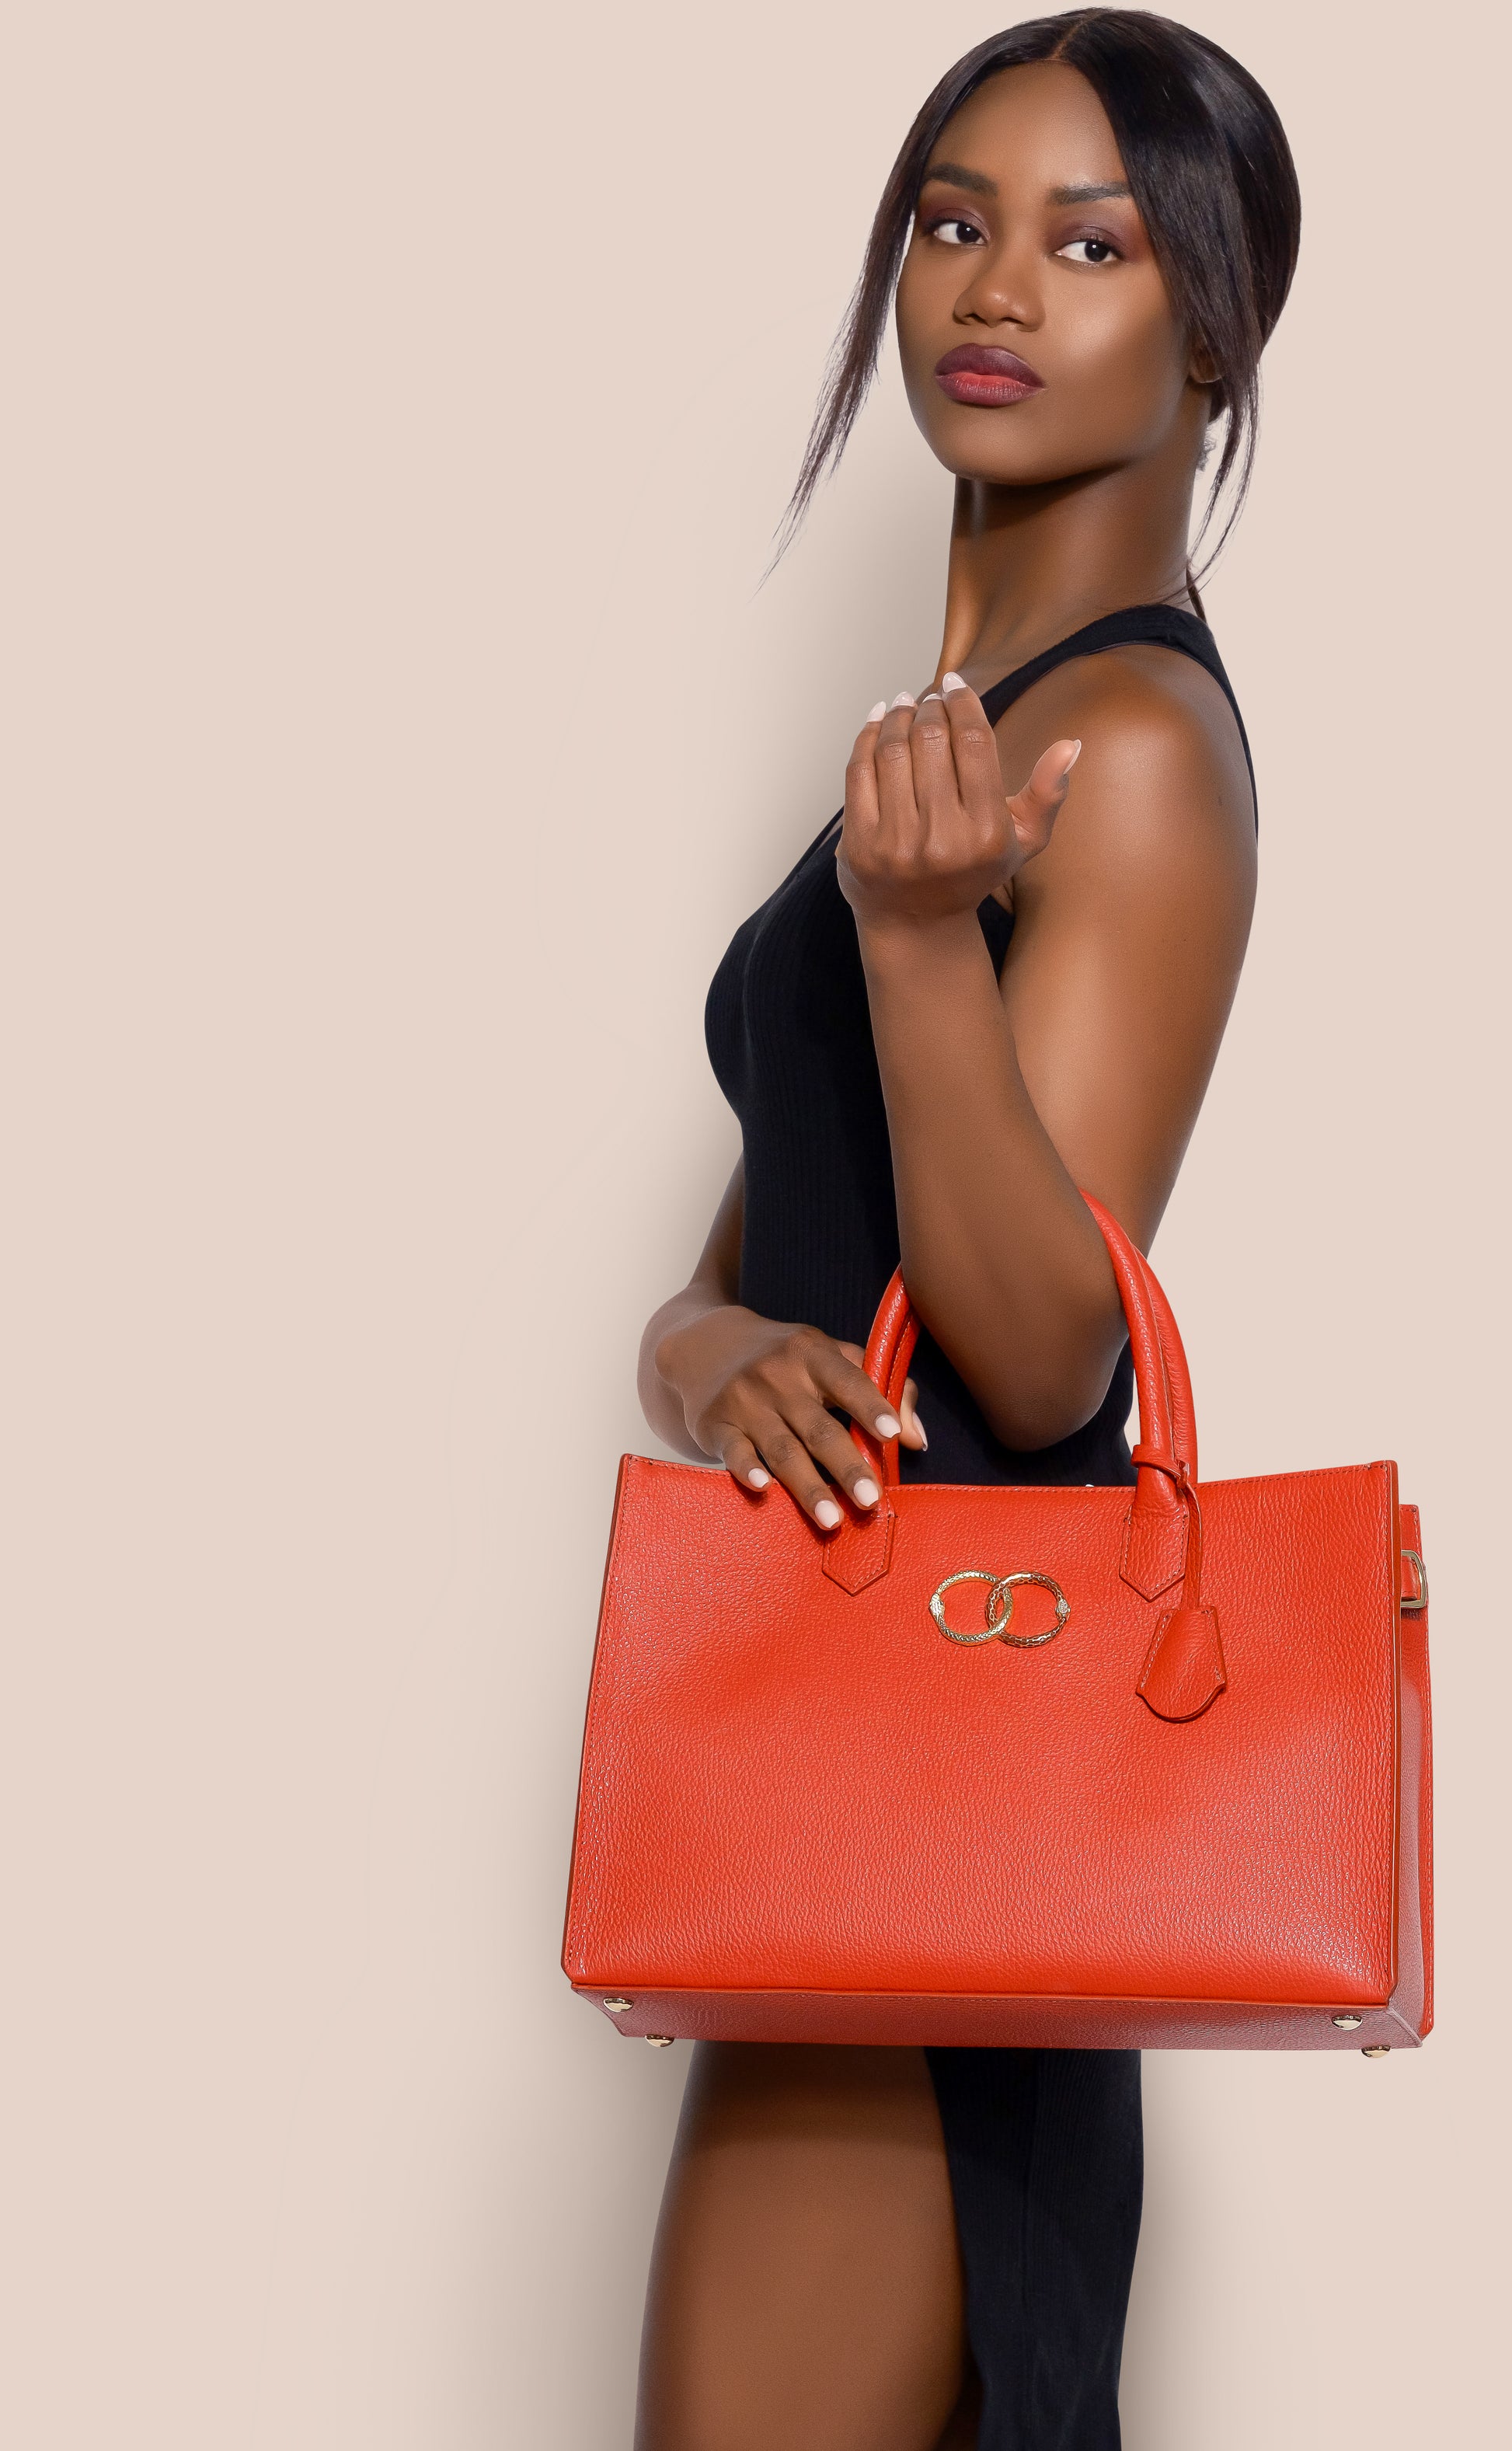 Ouroboros red genuine leather women's tote bag